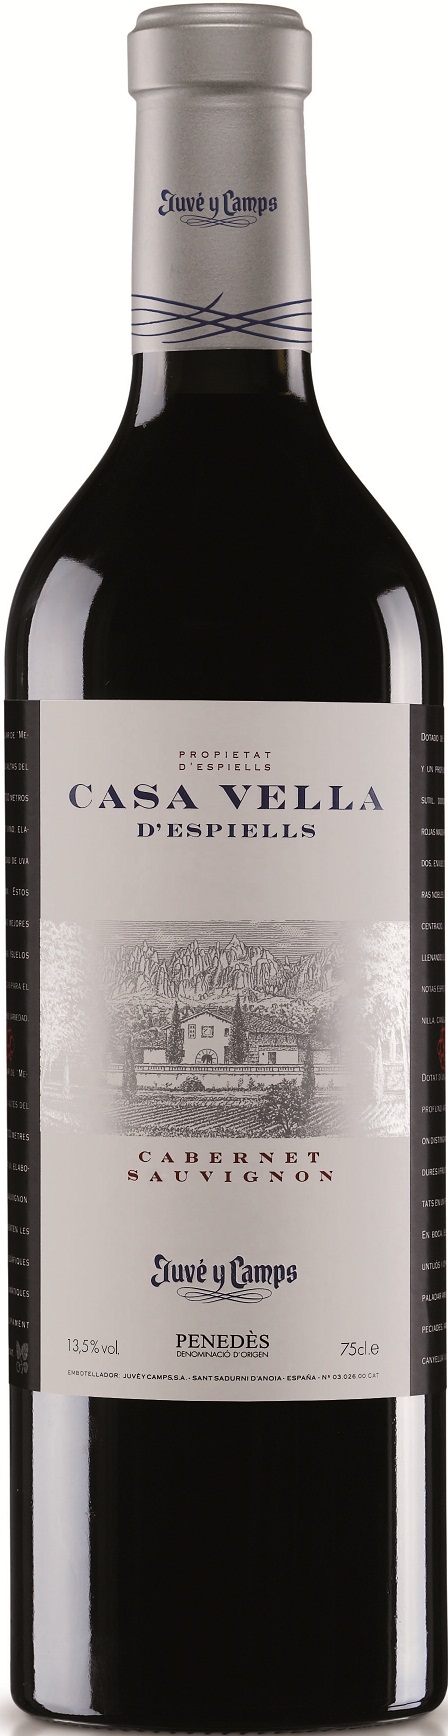 Image of Wine bottle Casa Vella d'Espiells